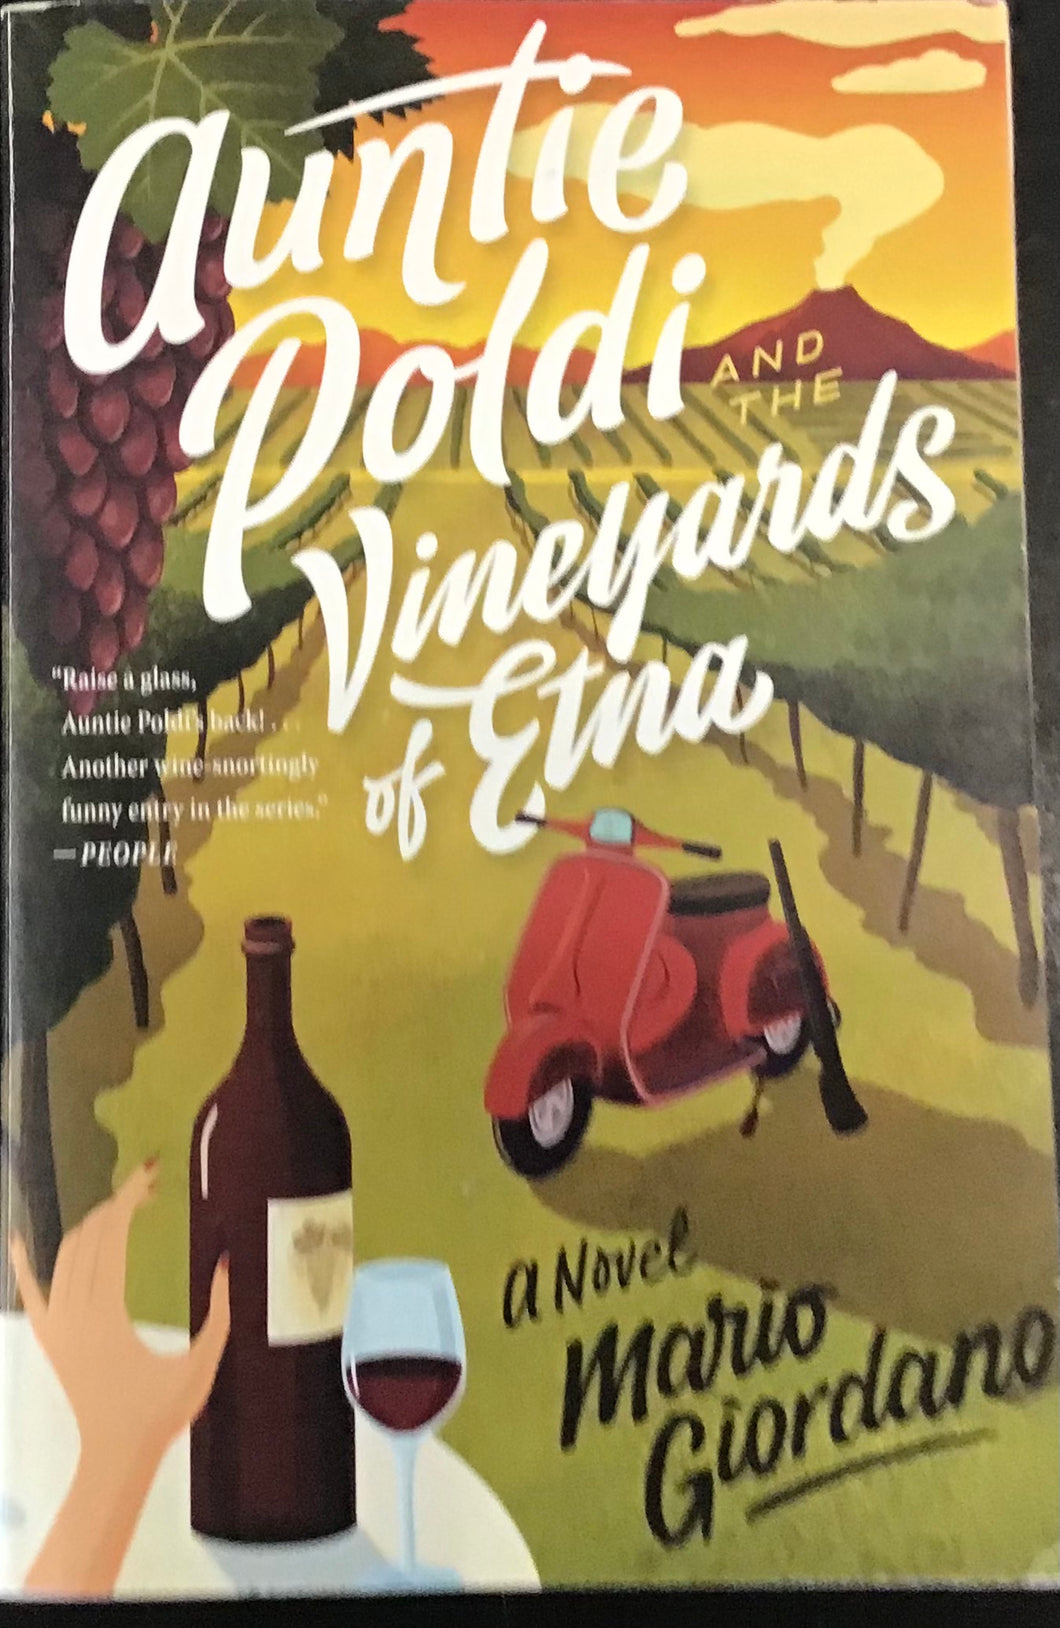 Auntie Poldi and the Vineyards of Etna, Mario Giordano